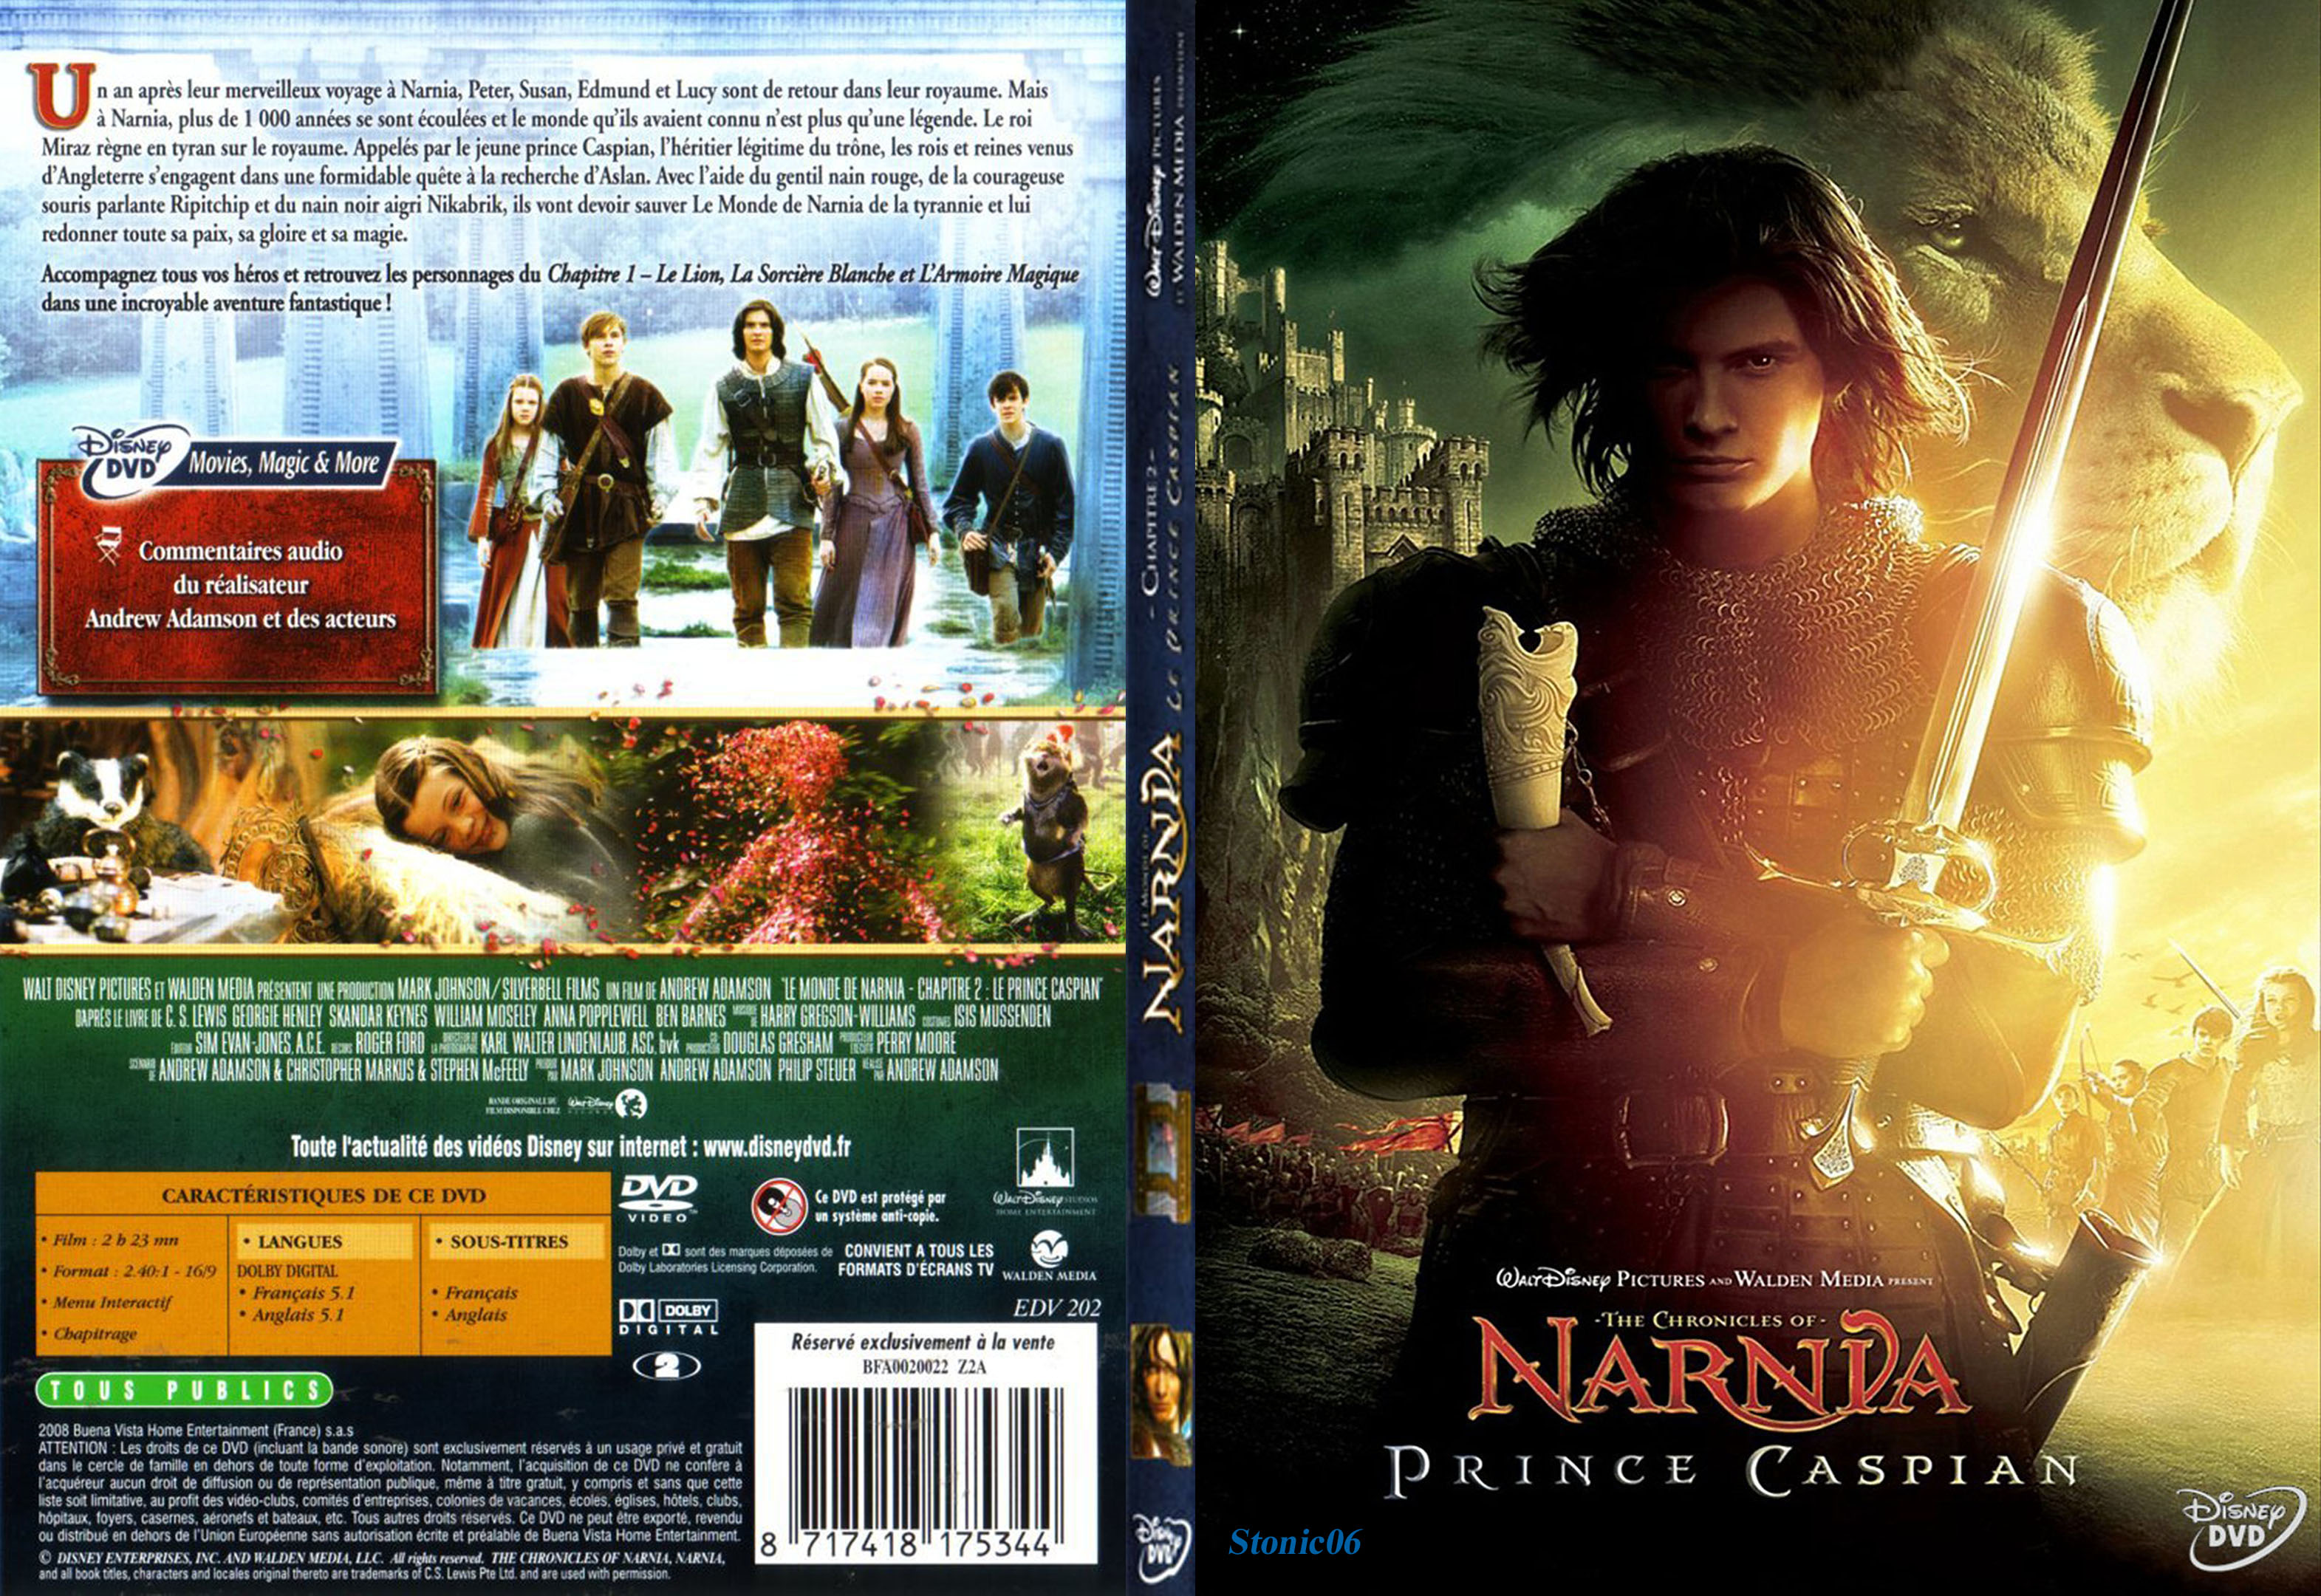 Jaquette DVD Le Monde de Narnia chapitre 2 - Prince Caspian - SLIM